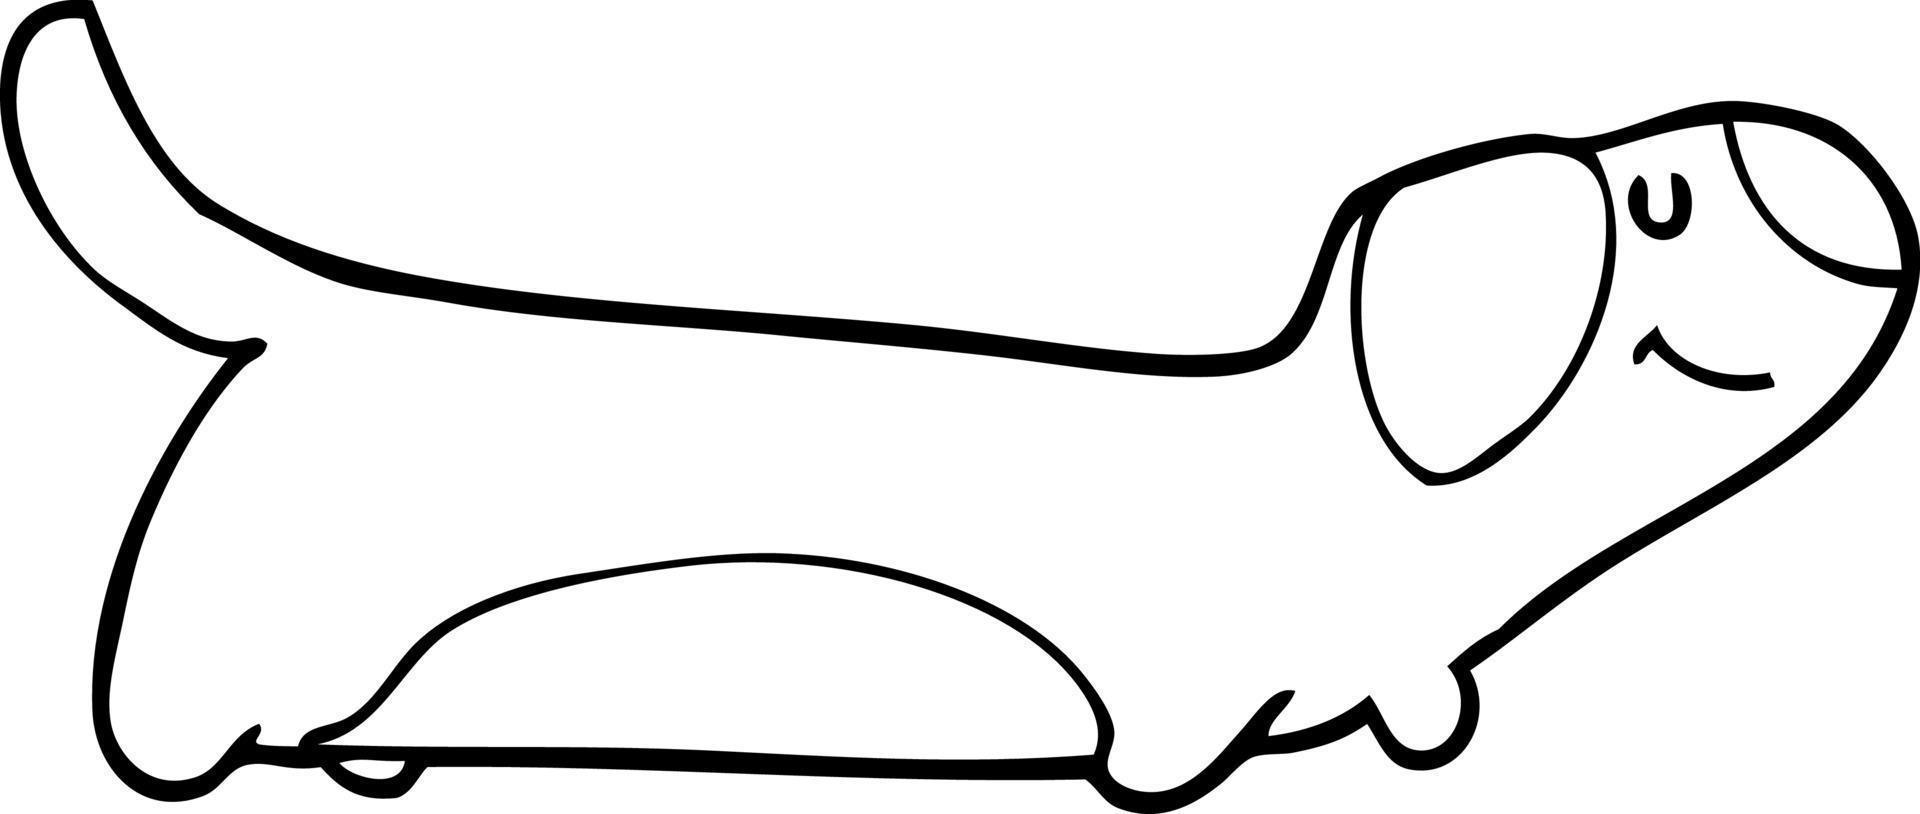 linje teckning tecknad serie hund vektor